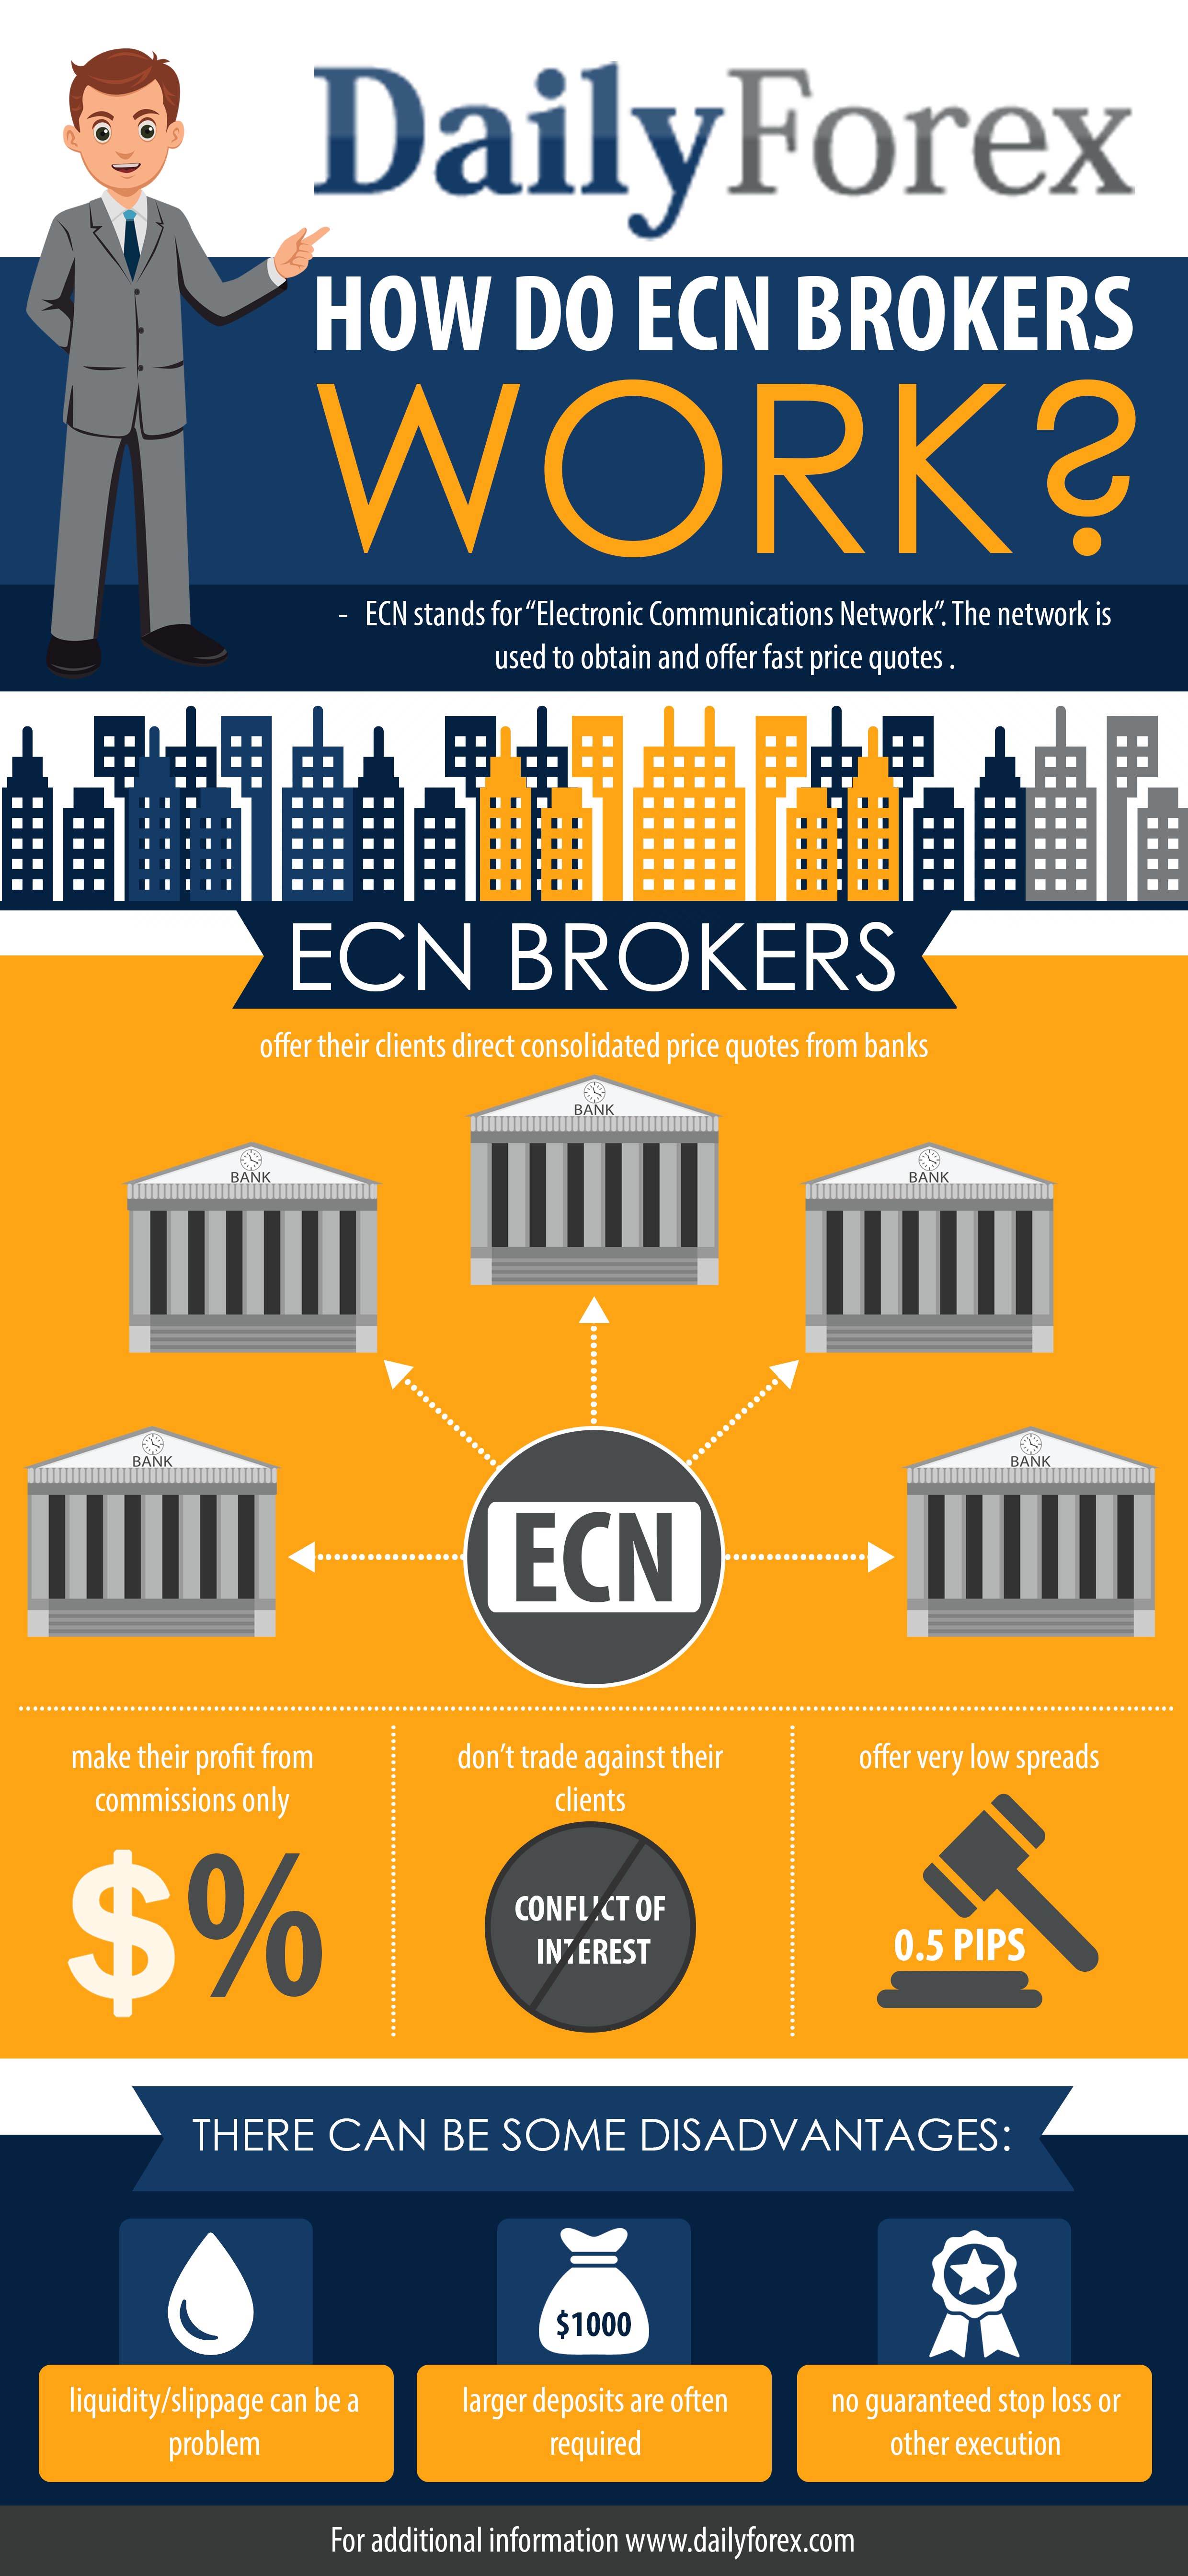 Ecn forex broker uk